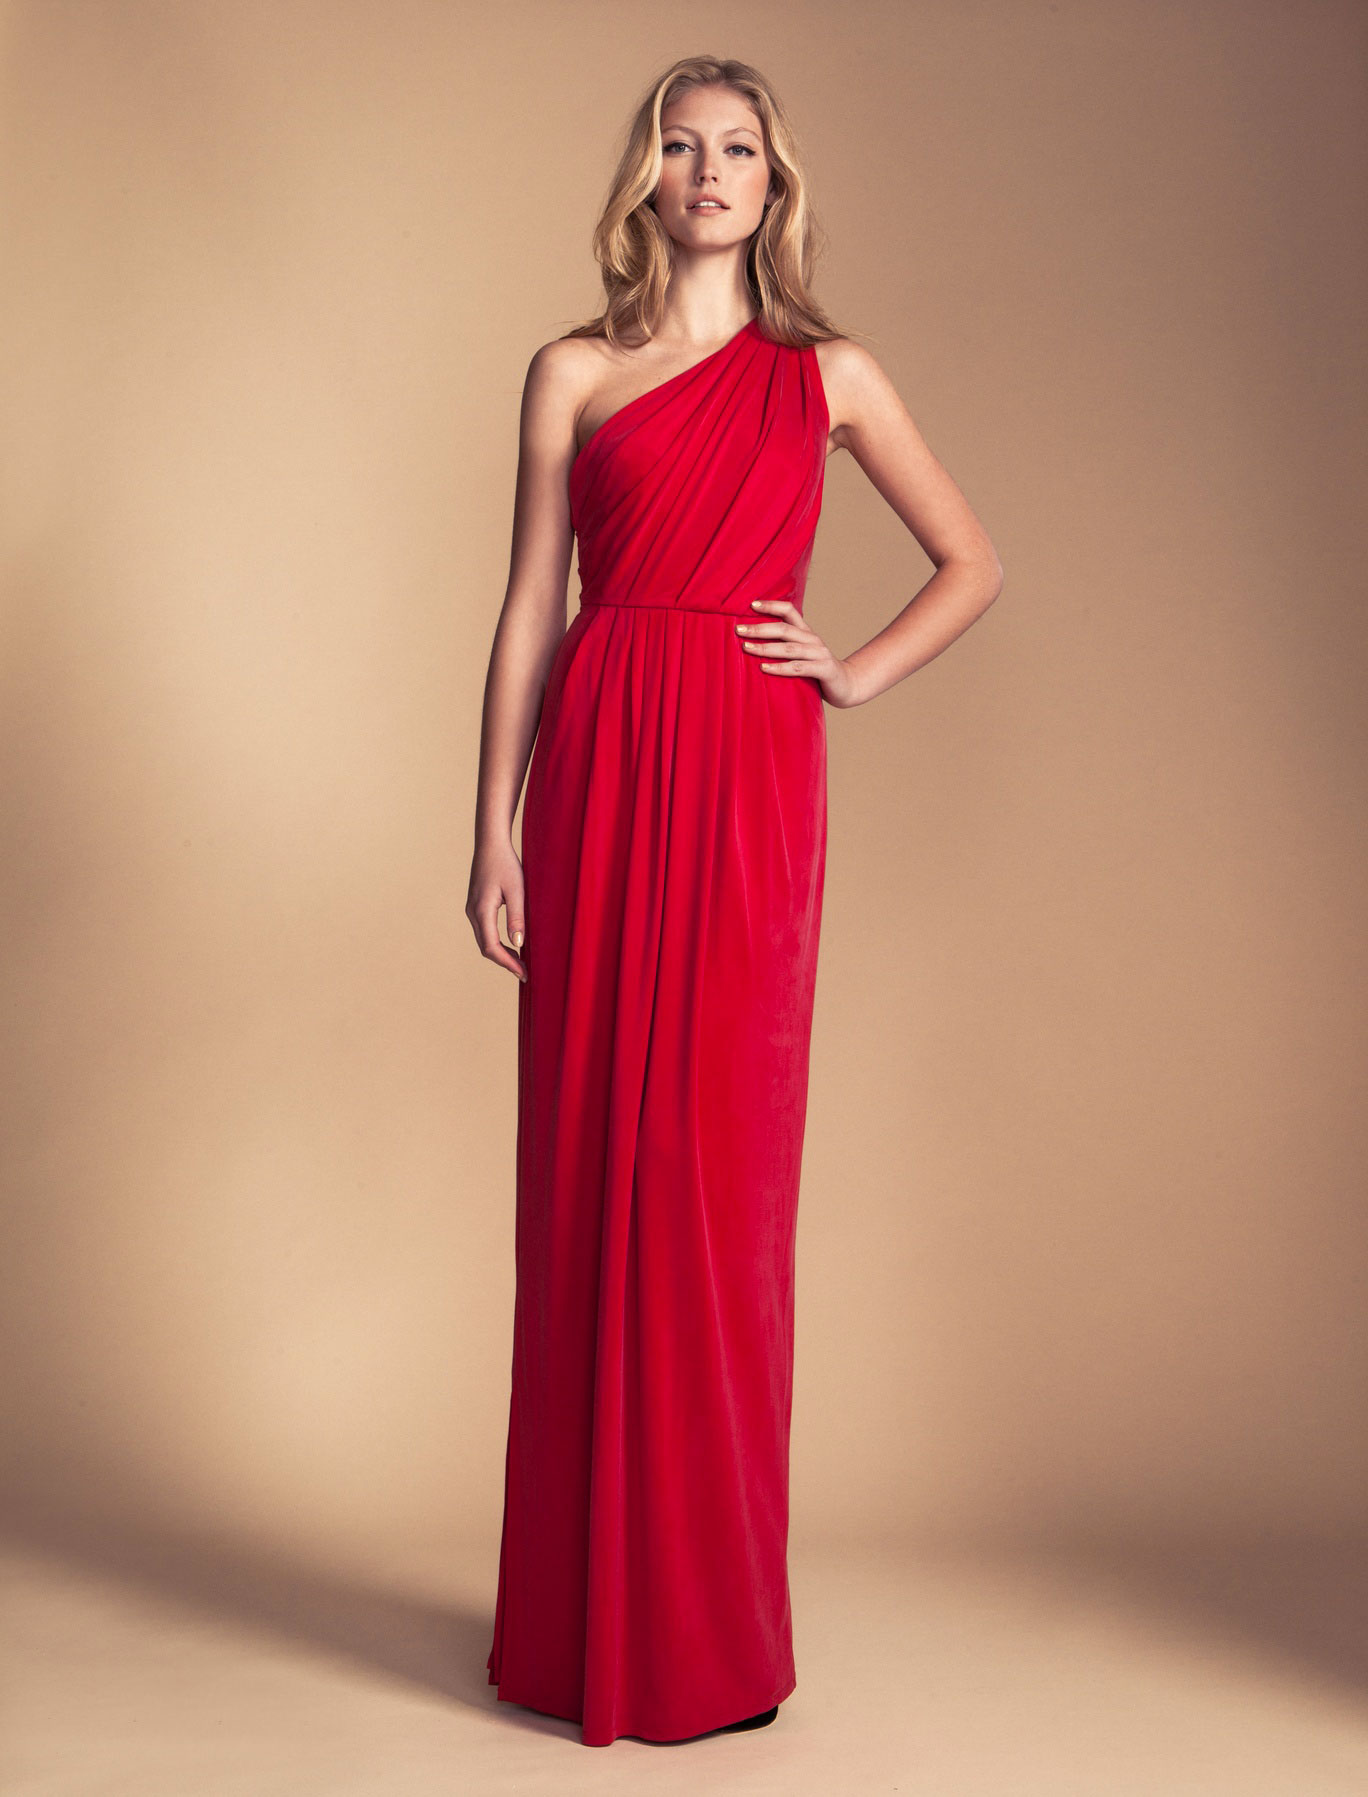 Lyst - Temperley london Long Annabelle Jersey Dress in Red